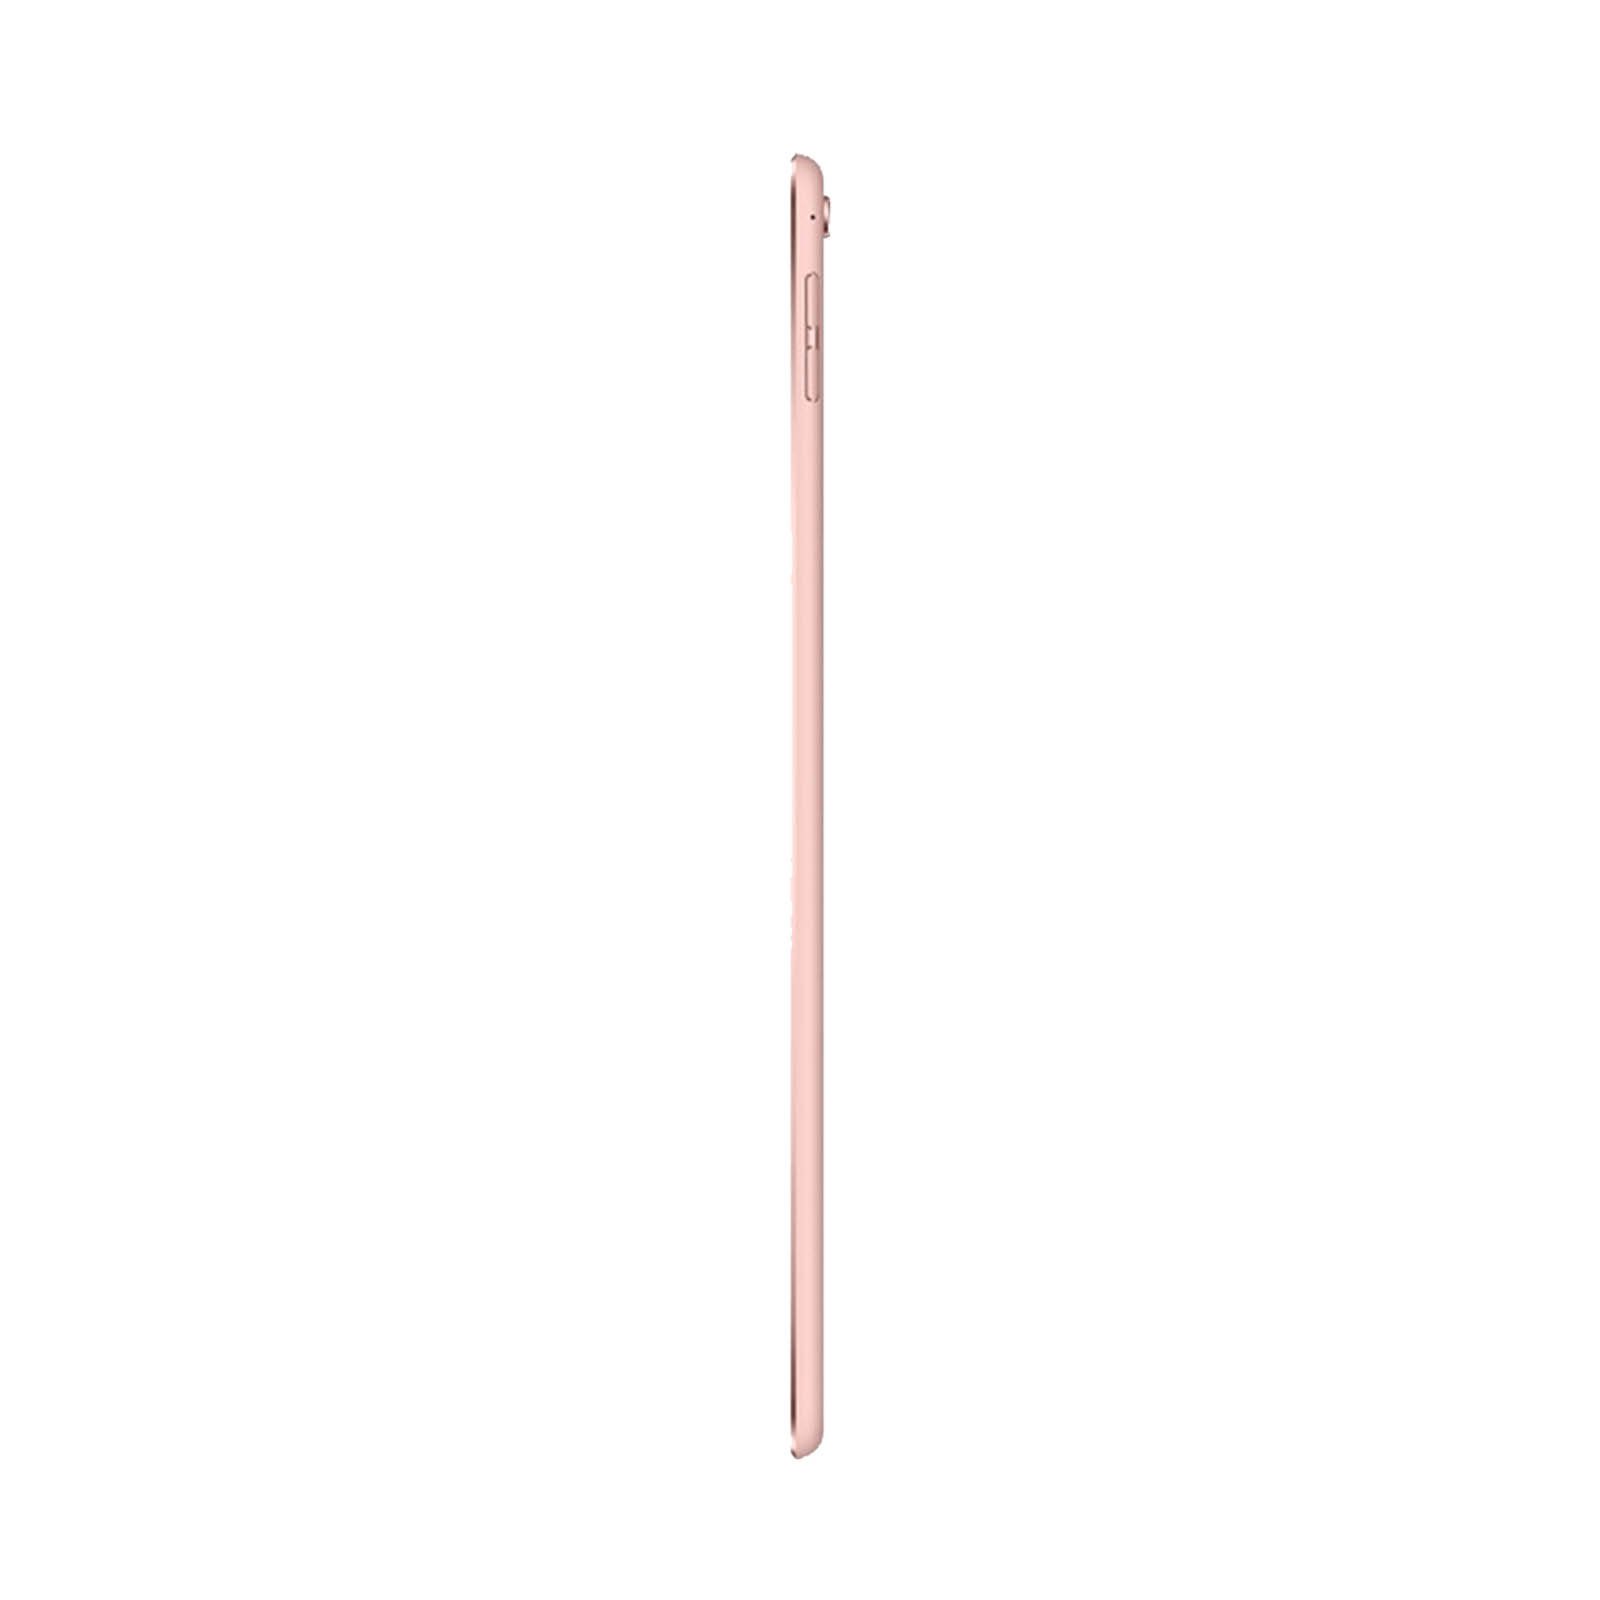 iPad Pro 9.7 Inch 256GB Rose Gold Good - Unlocked